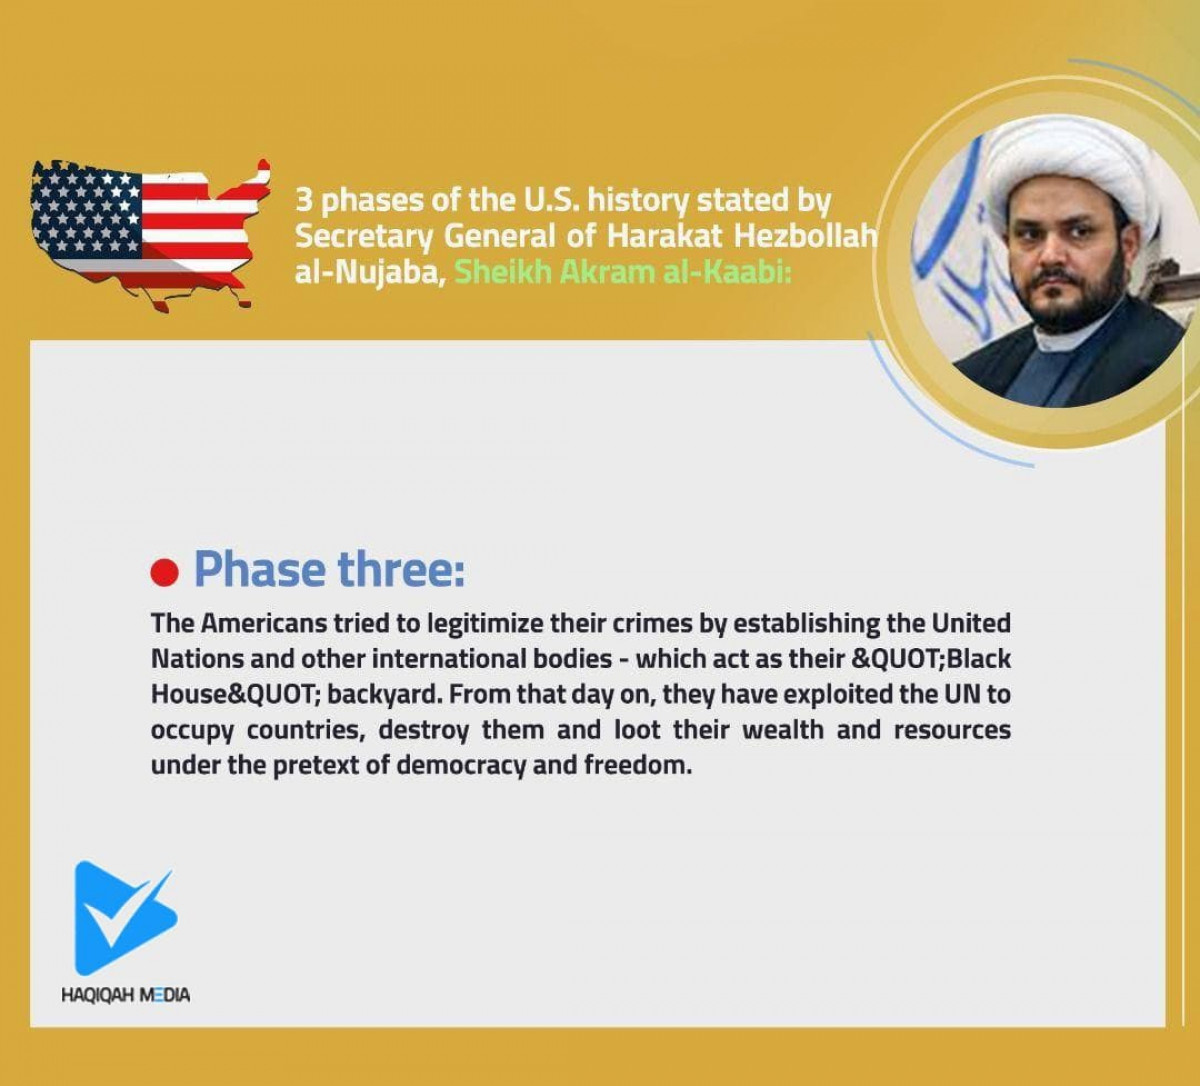 3 phases of the U.S. history stated by Secretary General of Harakat Hezbollah al-Nujaba, Sheikh Akram al-Kaabi 3